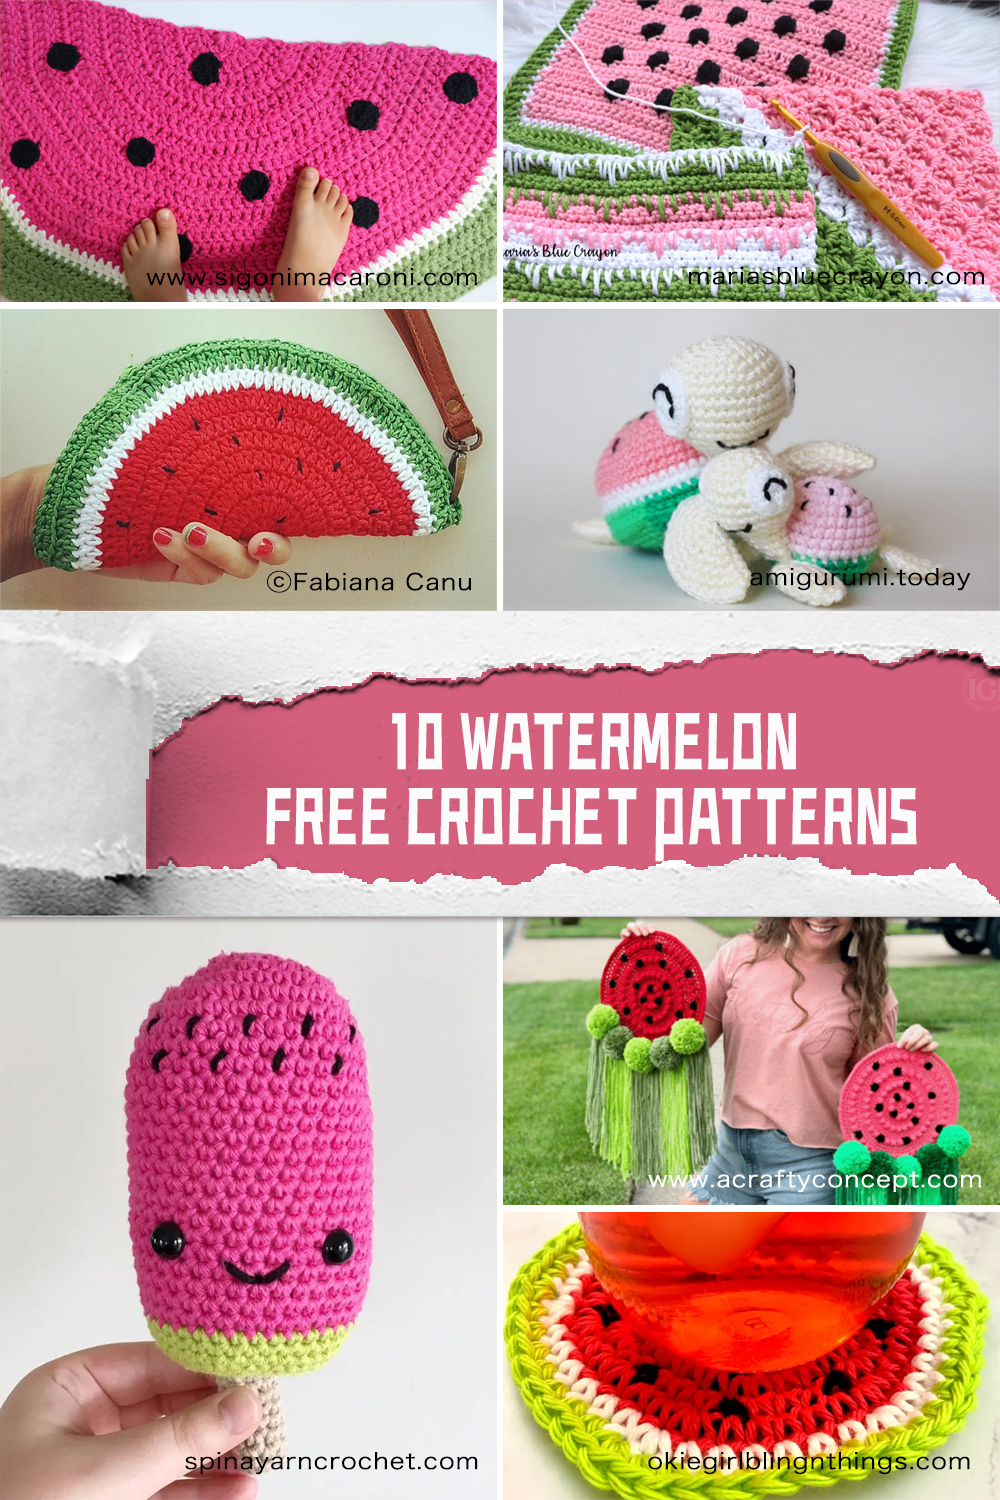 10 FREE Watermelon Crochet Patterns